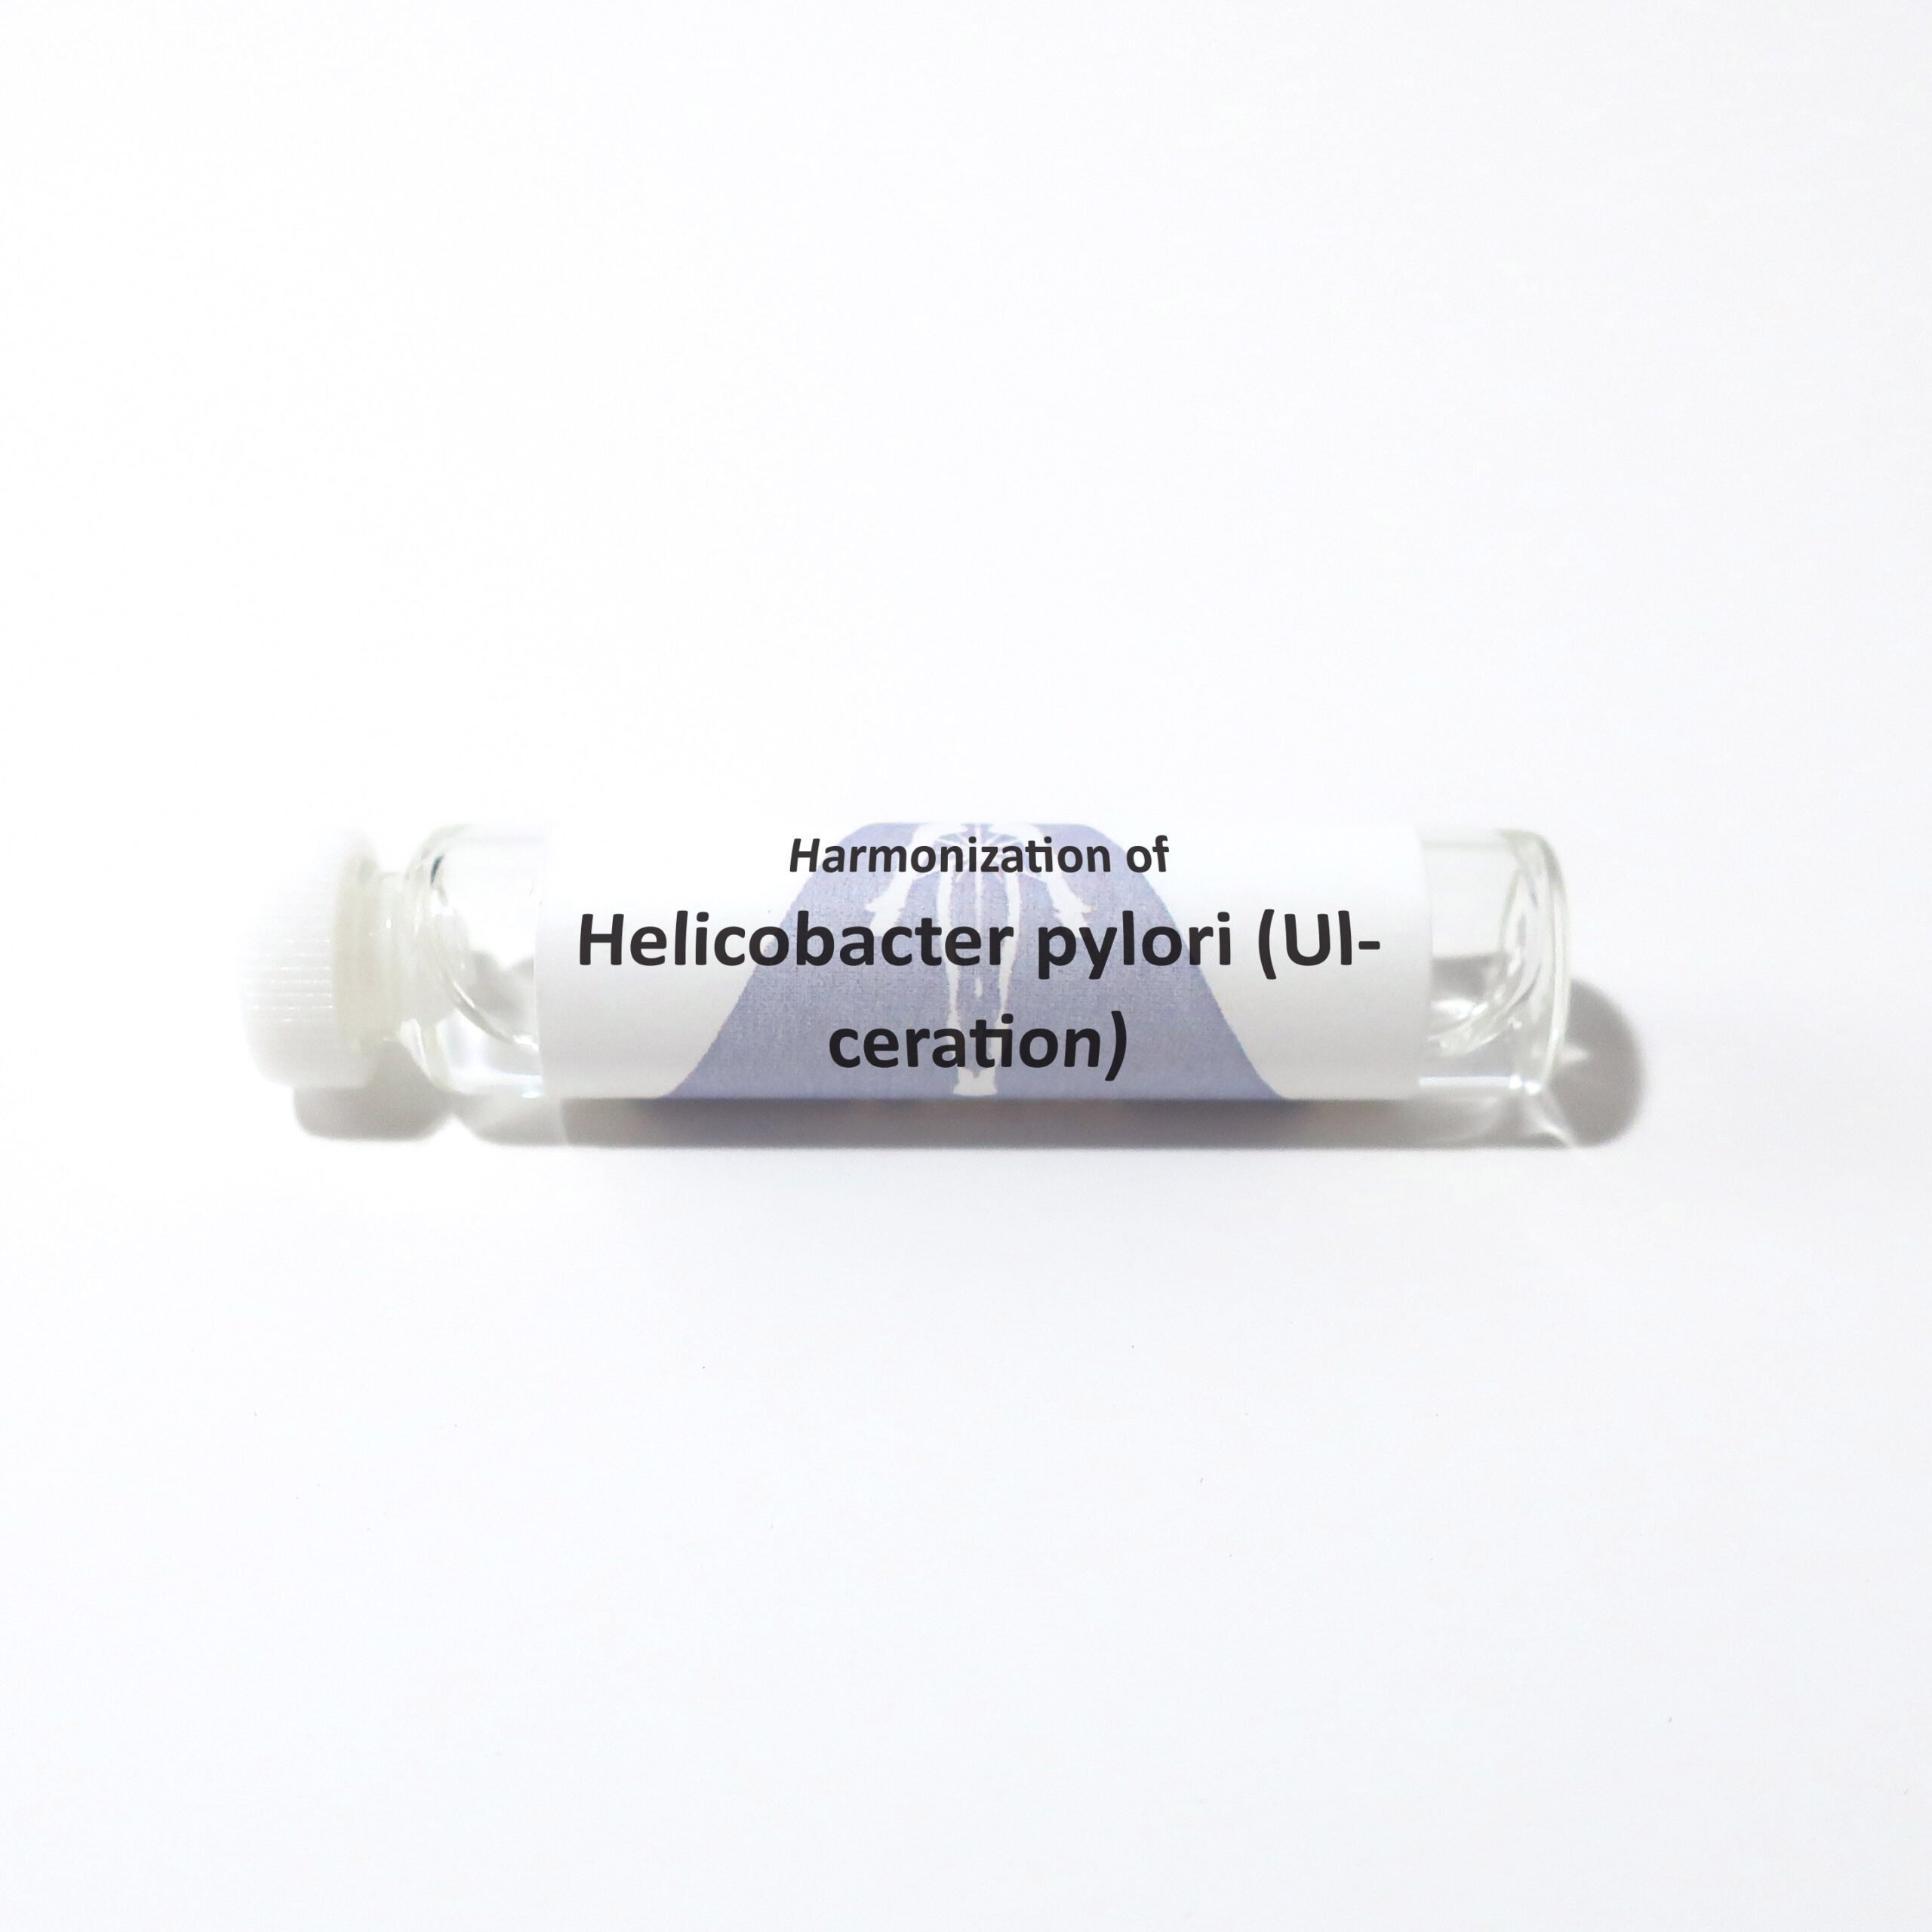 Helicobacter pylori (Ulceration)